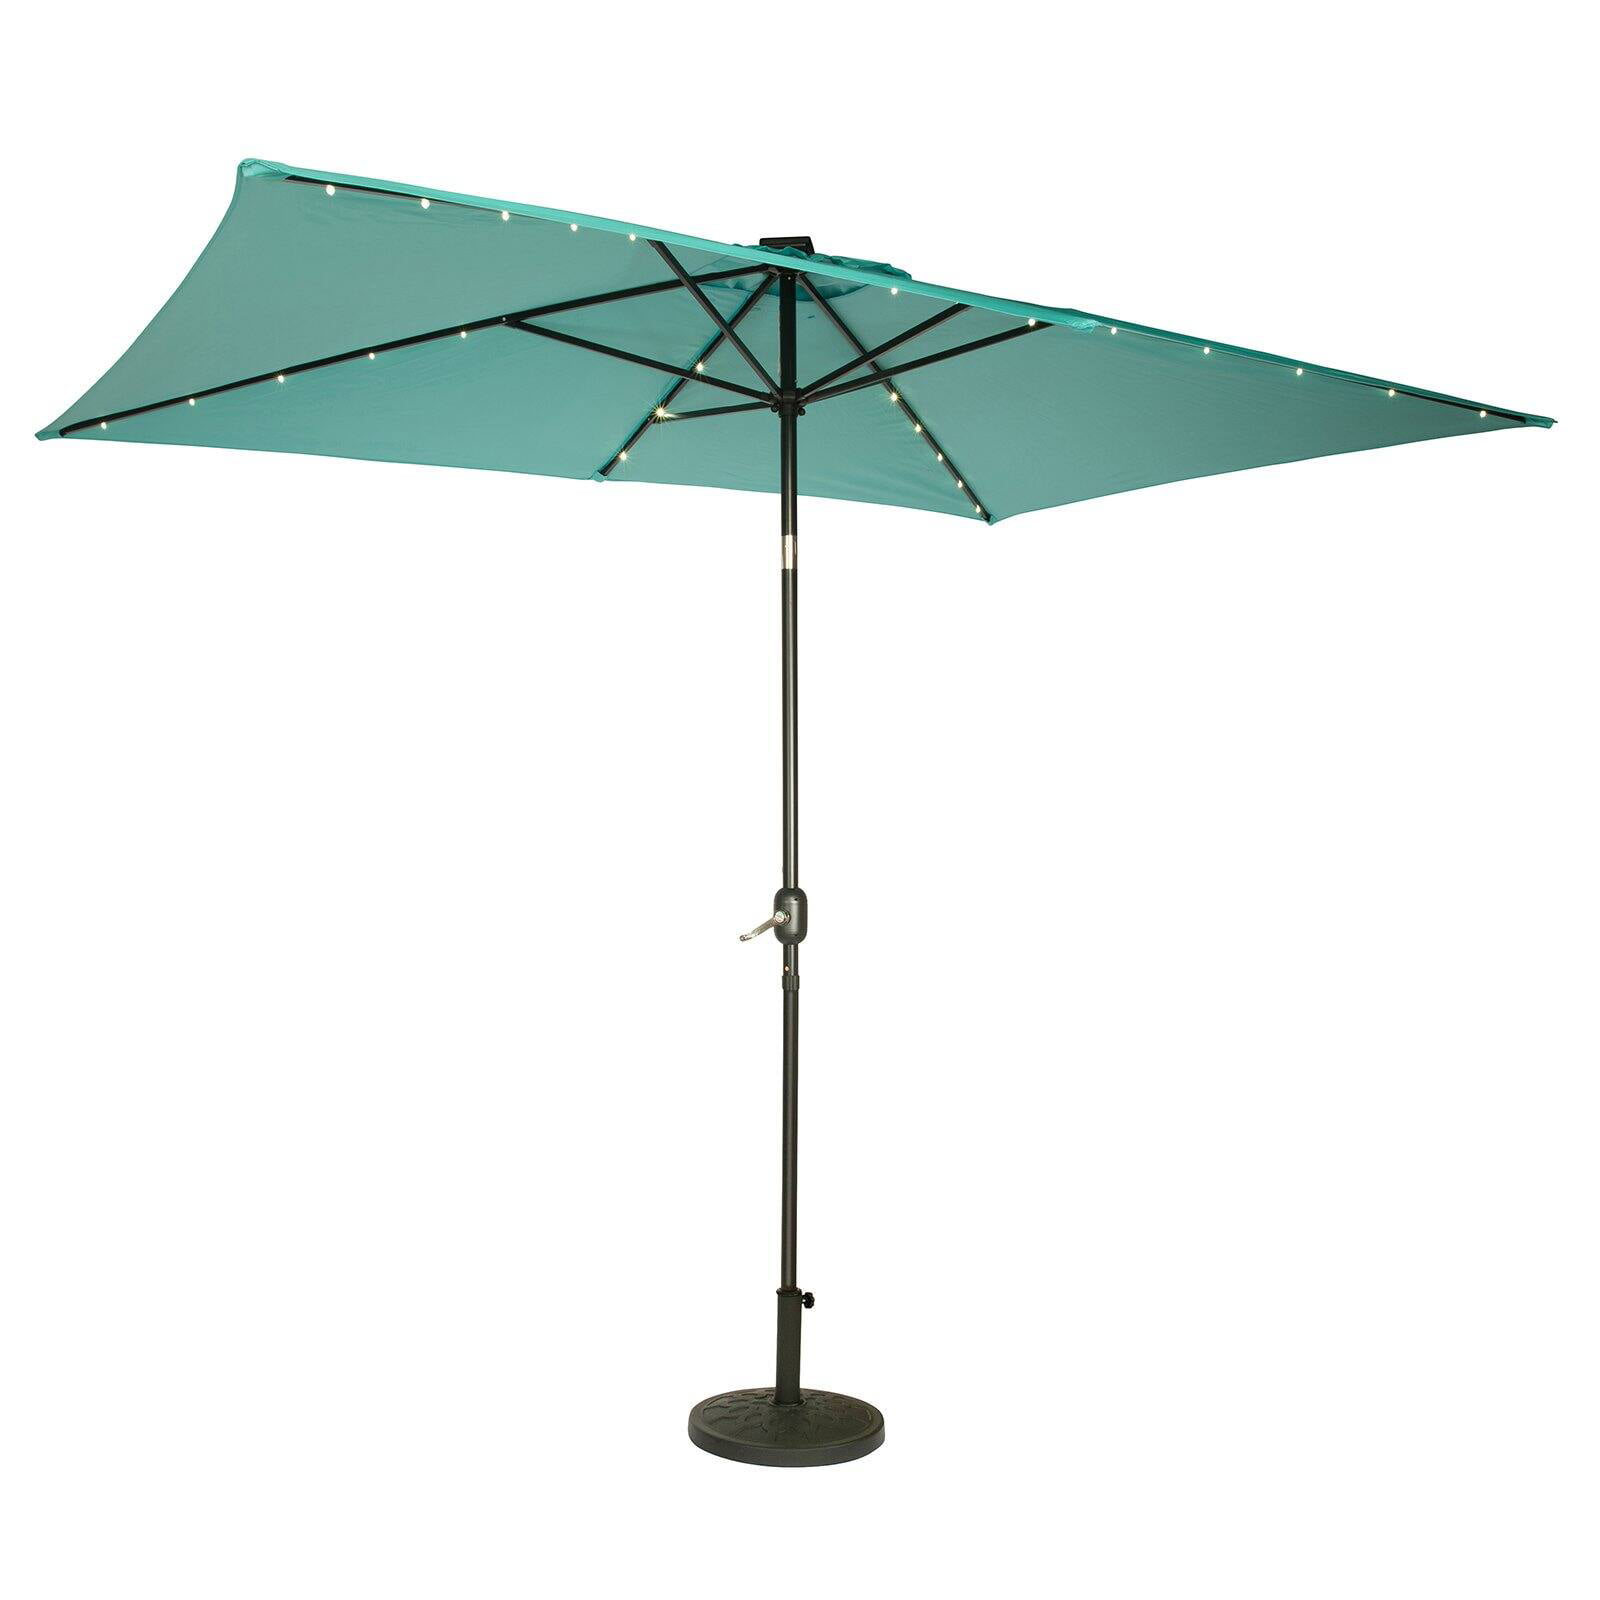 Taupe Linklife 10x6.5 Rectangular Patio Umbrella Outdoor Market Table Umbrella with Push Button Tilt and Crank